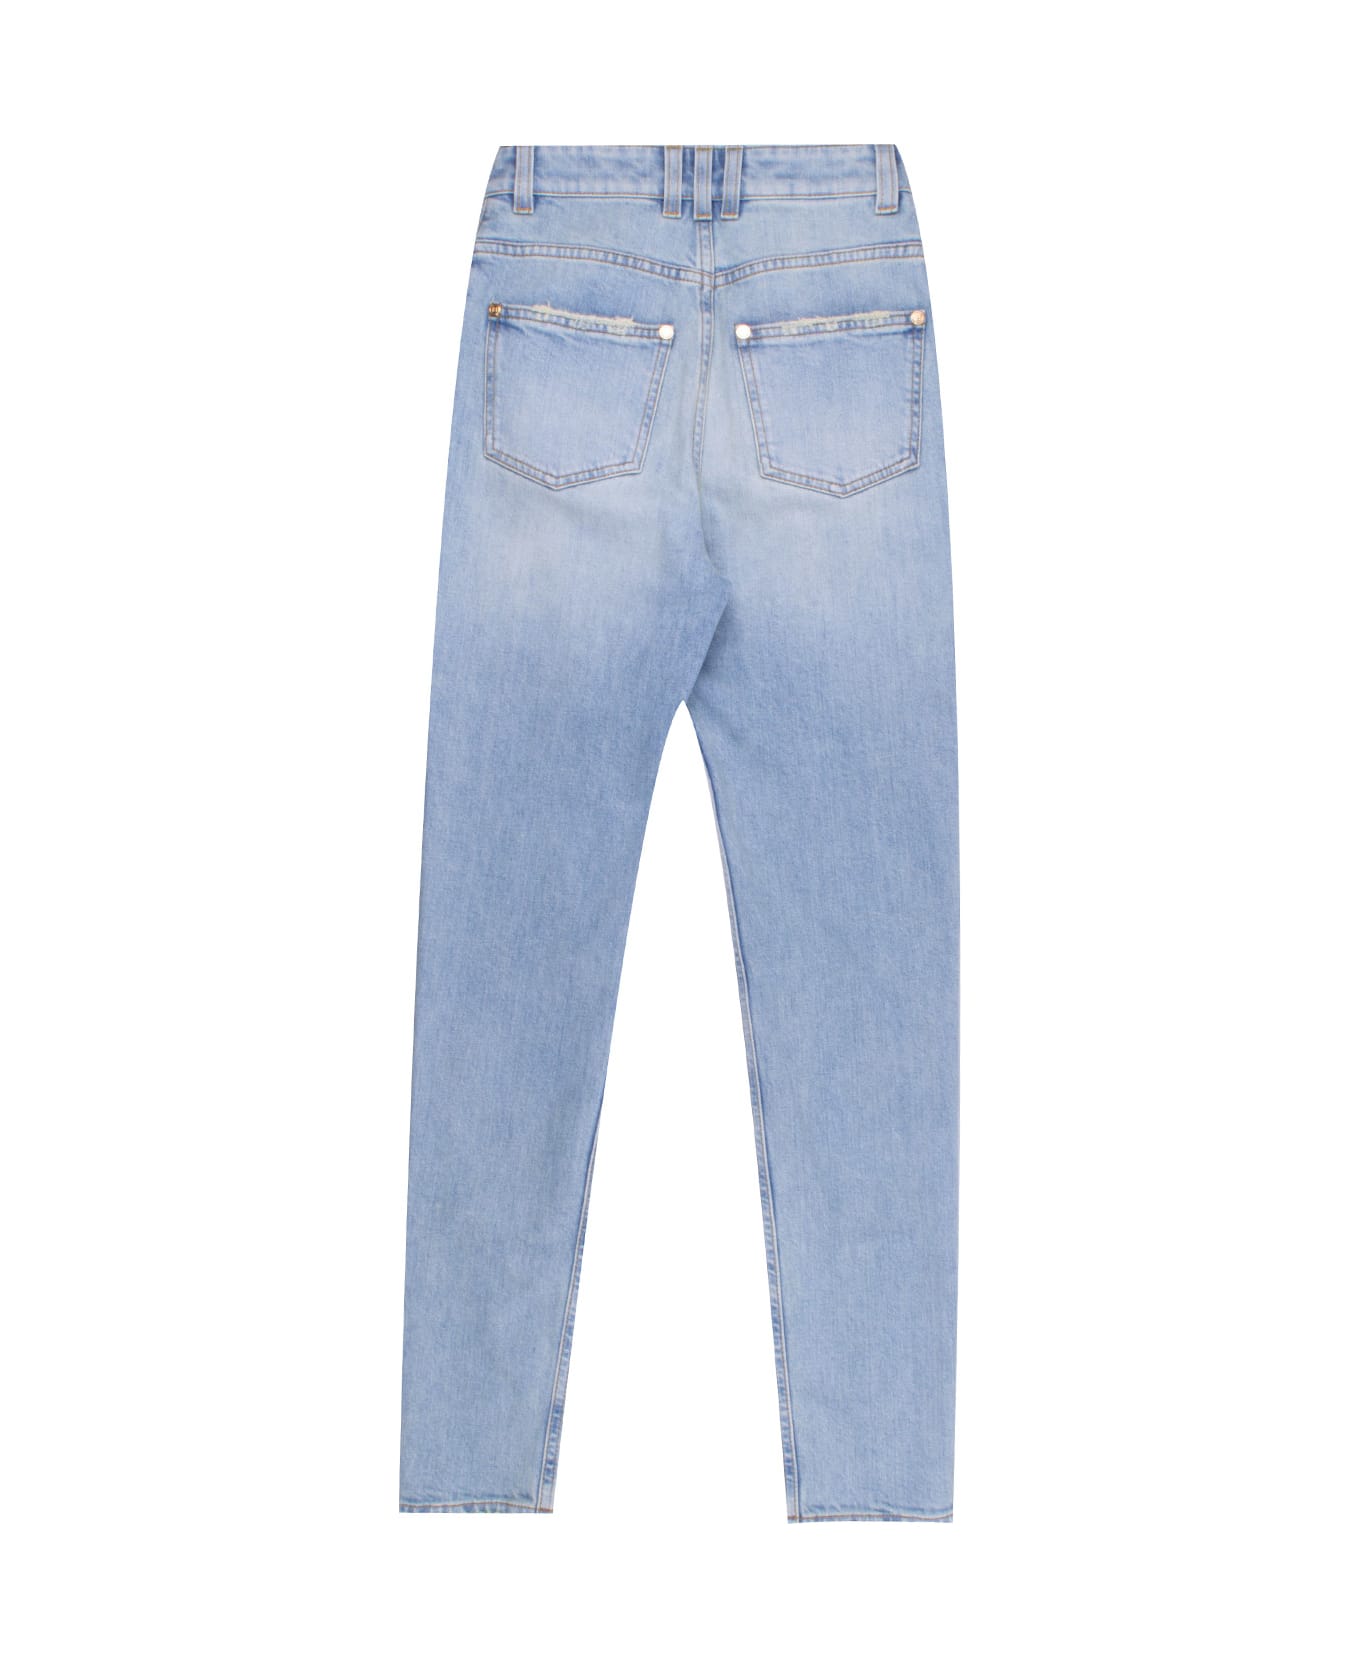 Balmain Cotton Jeans - Light blue